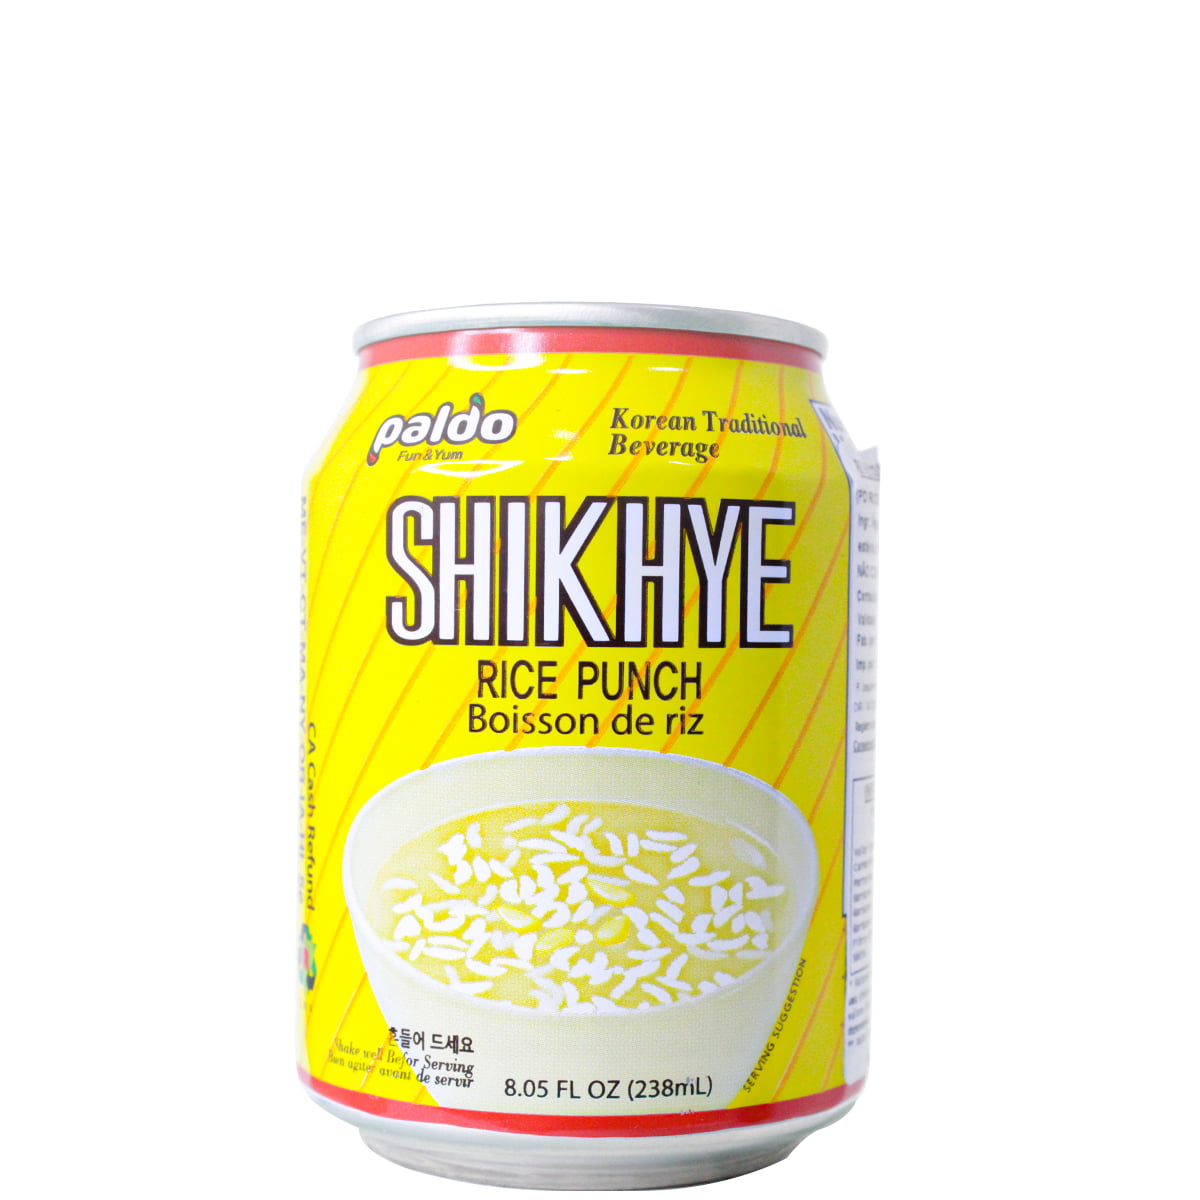 Bebida Coreana Adocicada de Arroz Shikhye Paldo  - 238mL